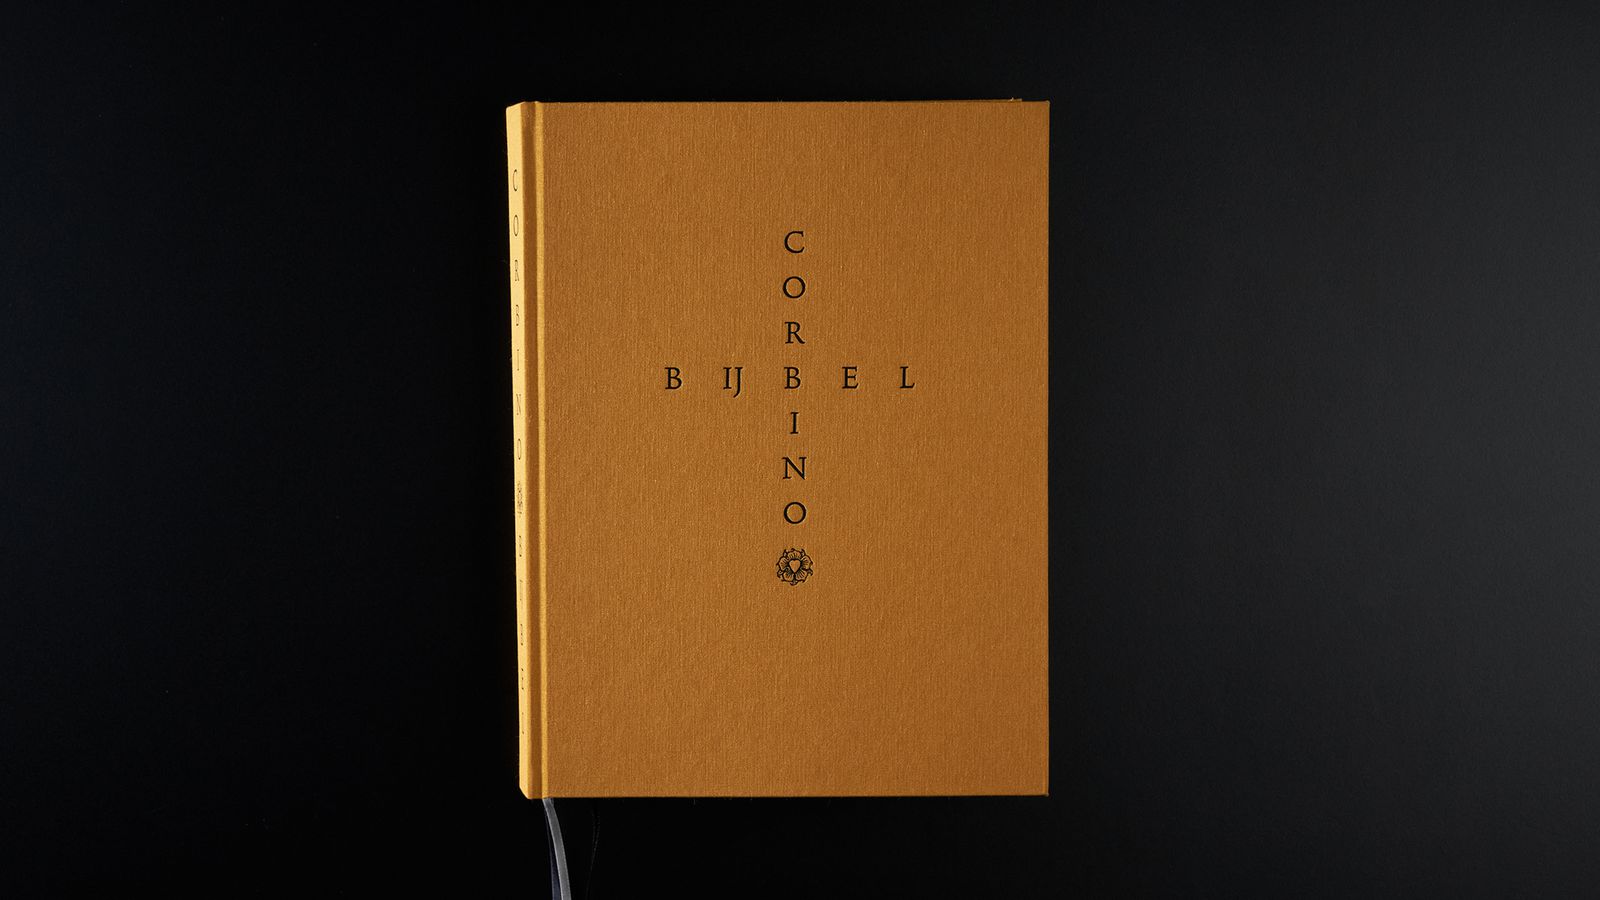 Corbino's bijbel - Cover.jpg